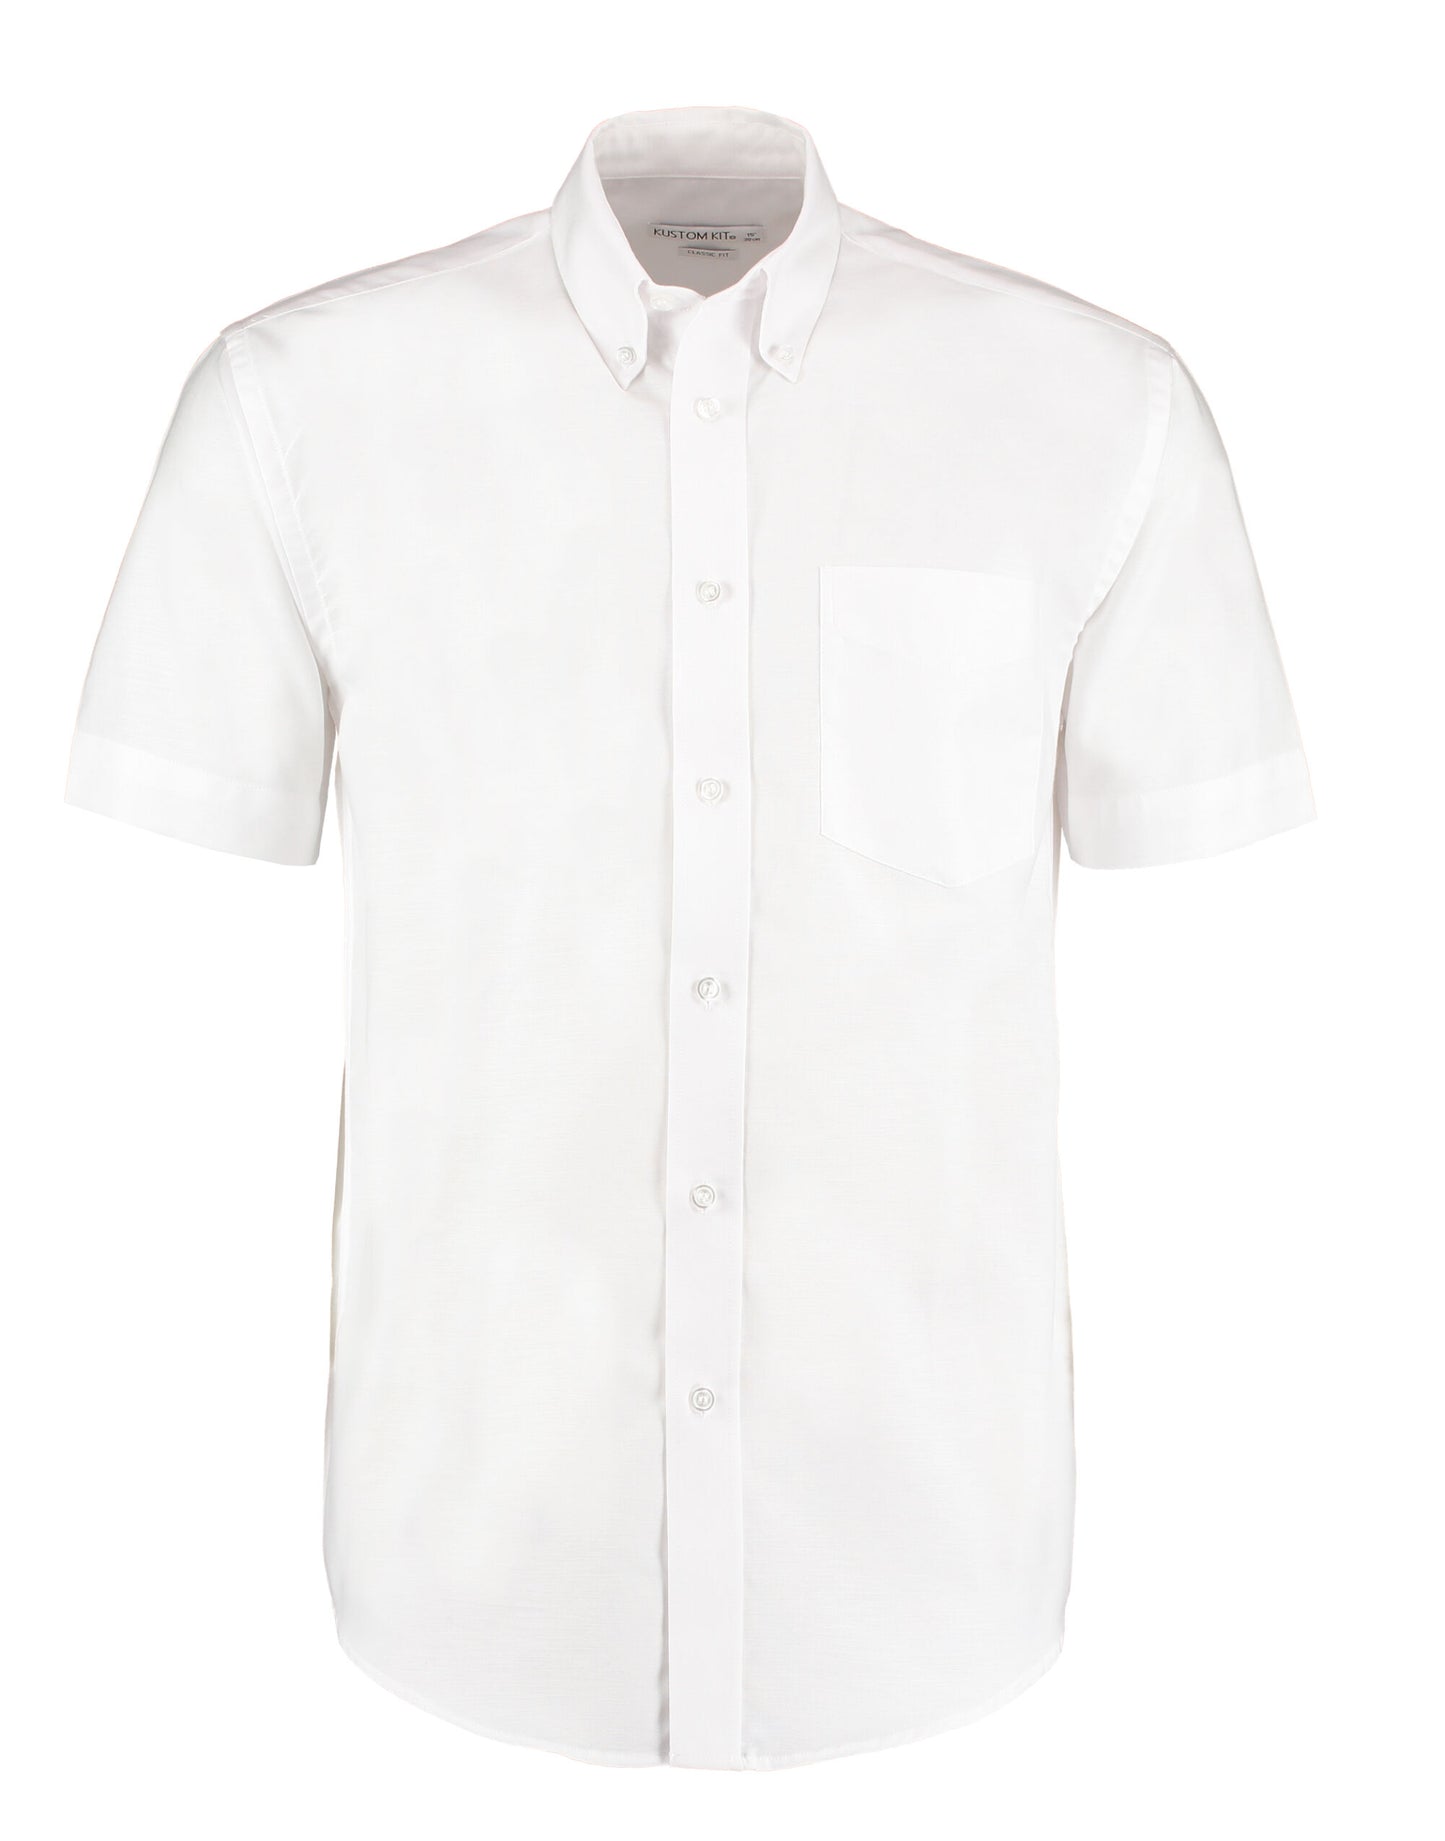 KK350 Kustom Kit Workwear Oxford Shirt Short Sleeve